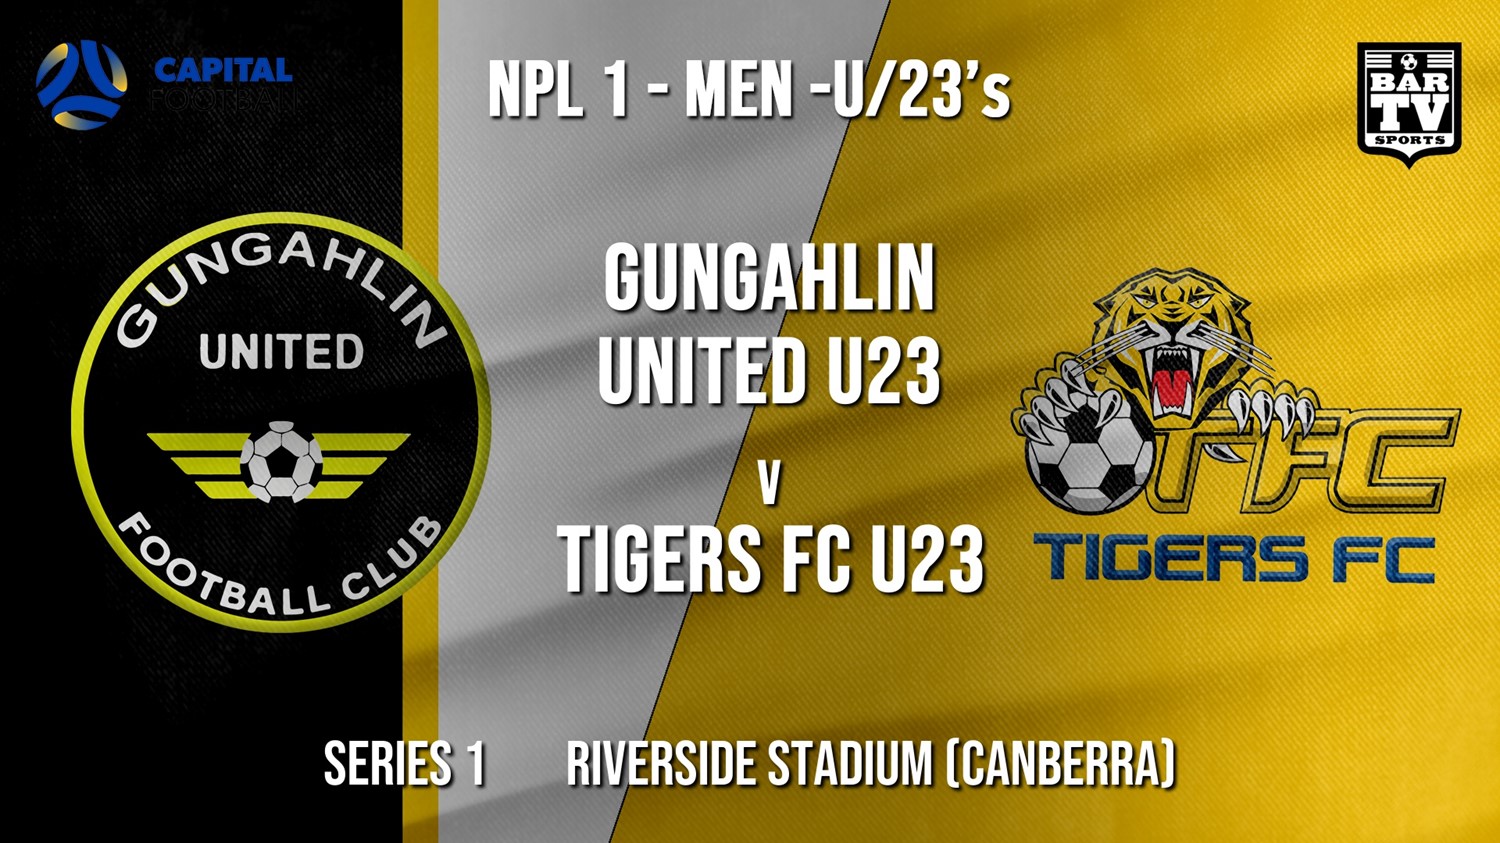 NPL1 Men - U23 - Capital Football  Series 1 - Gungahlin United U23 v Tigers FC U23 Minigame Slate Image